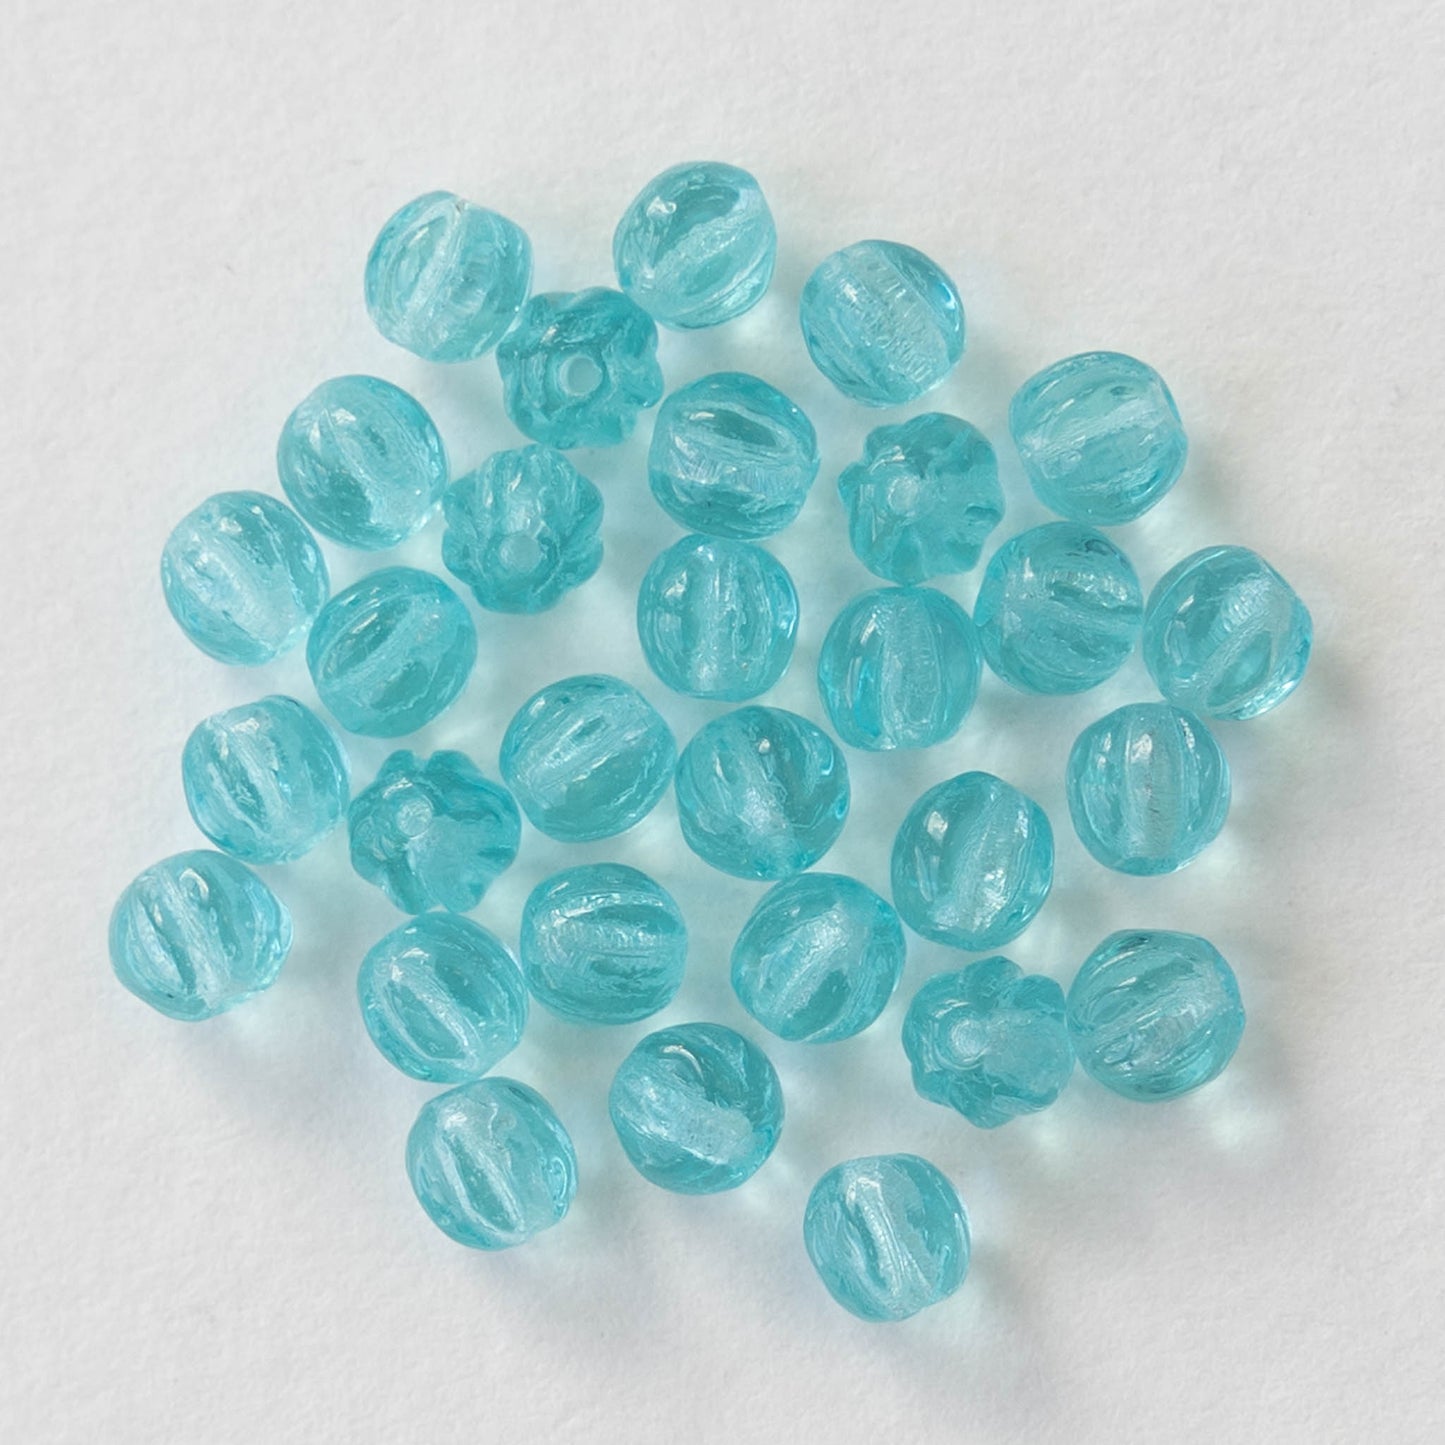 4mm Melon Beads - Transparent Seafoam - 120 Beads